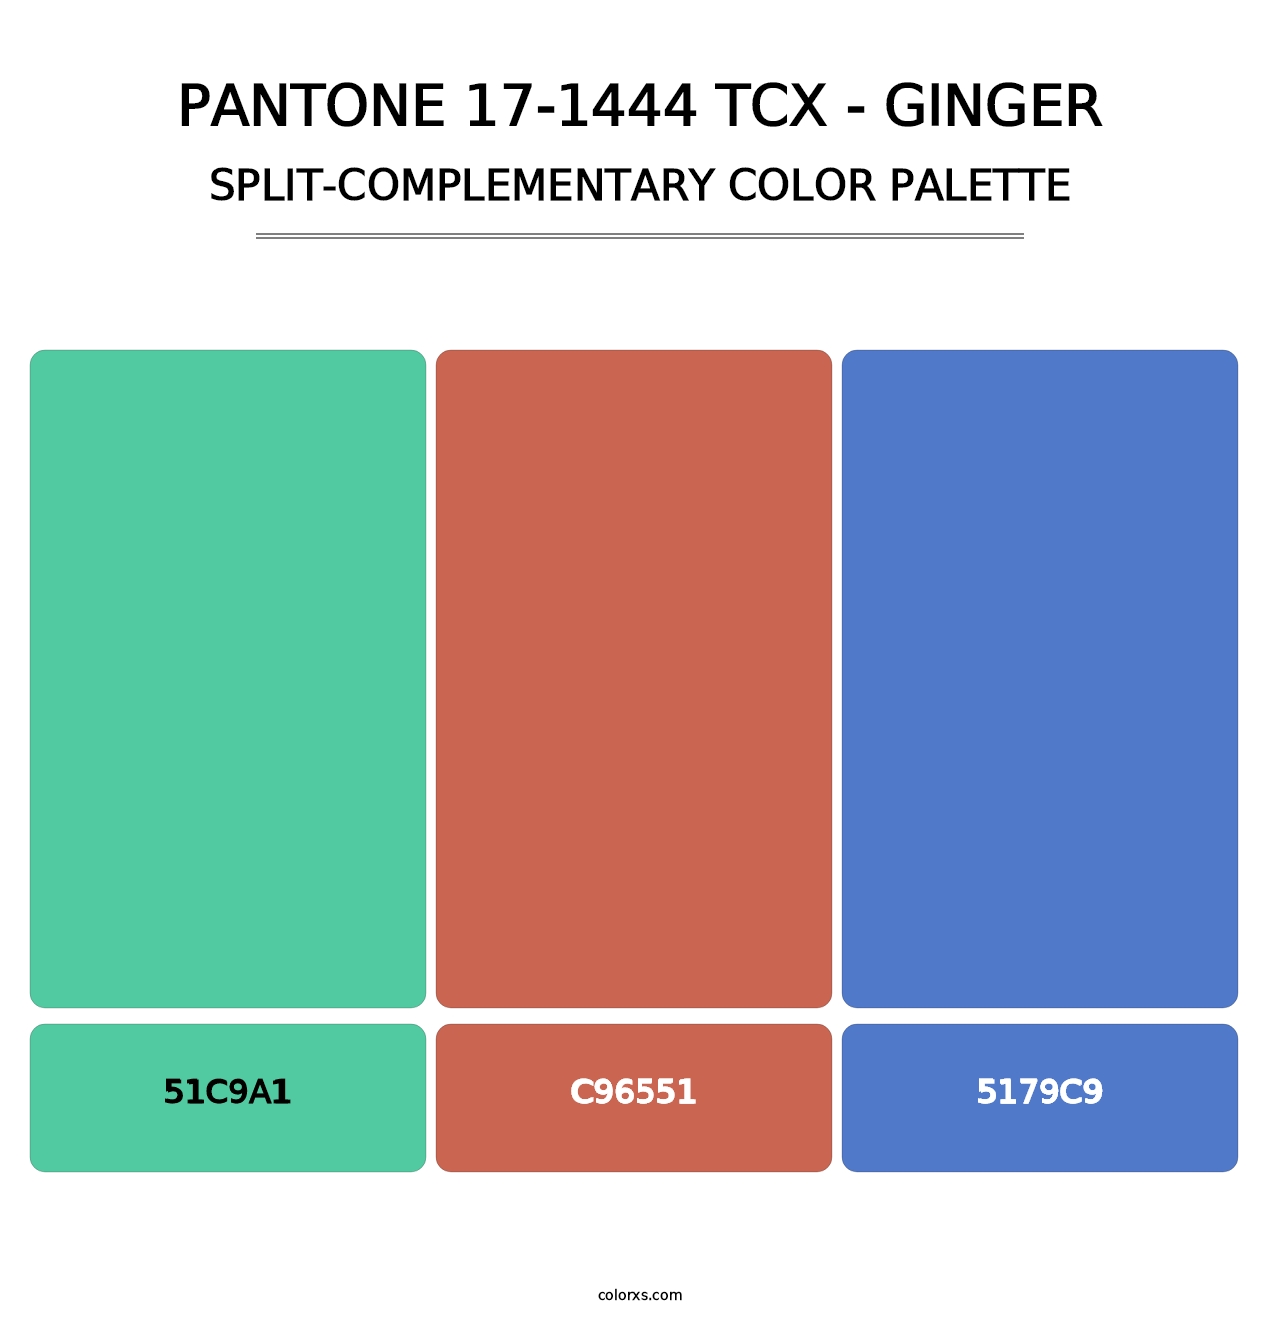 PANTONE 17-1444 TCX - Ginger - Split-Complementary Color Palette